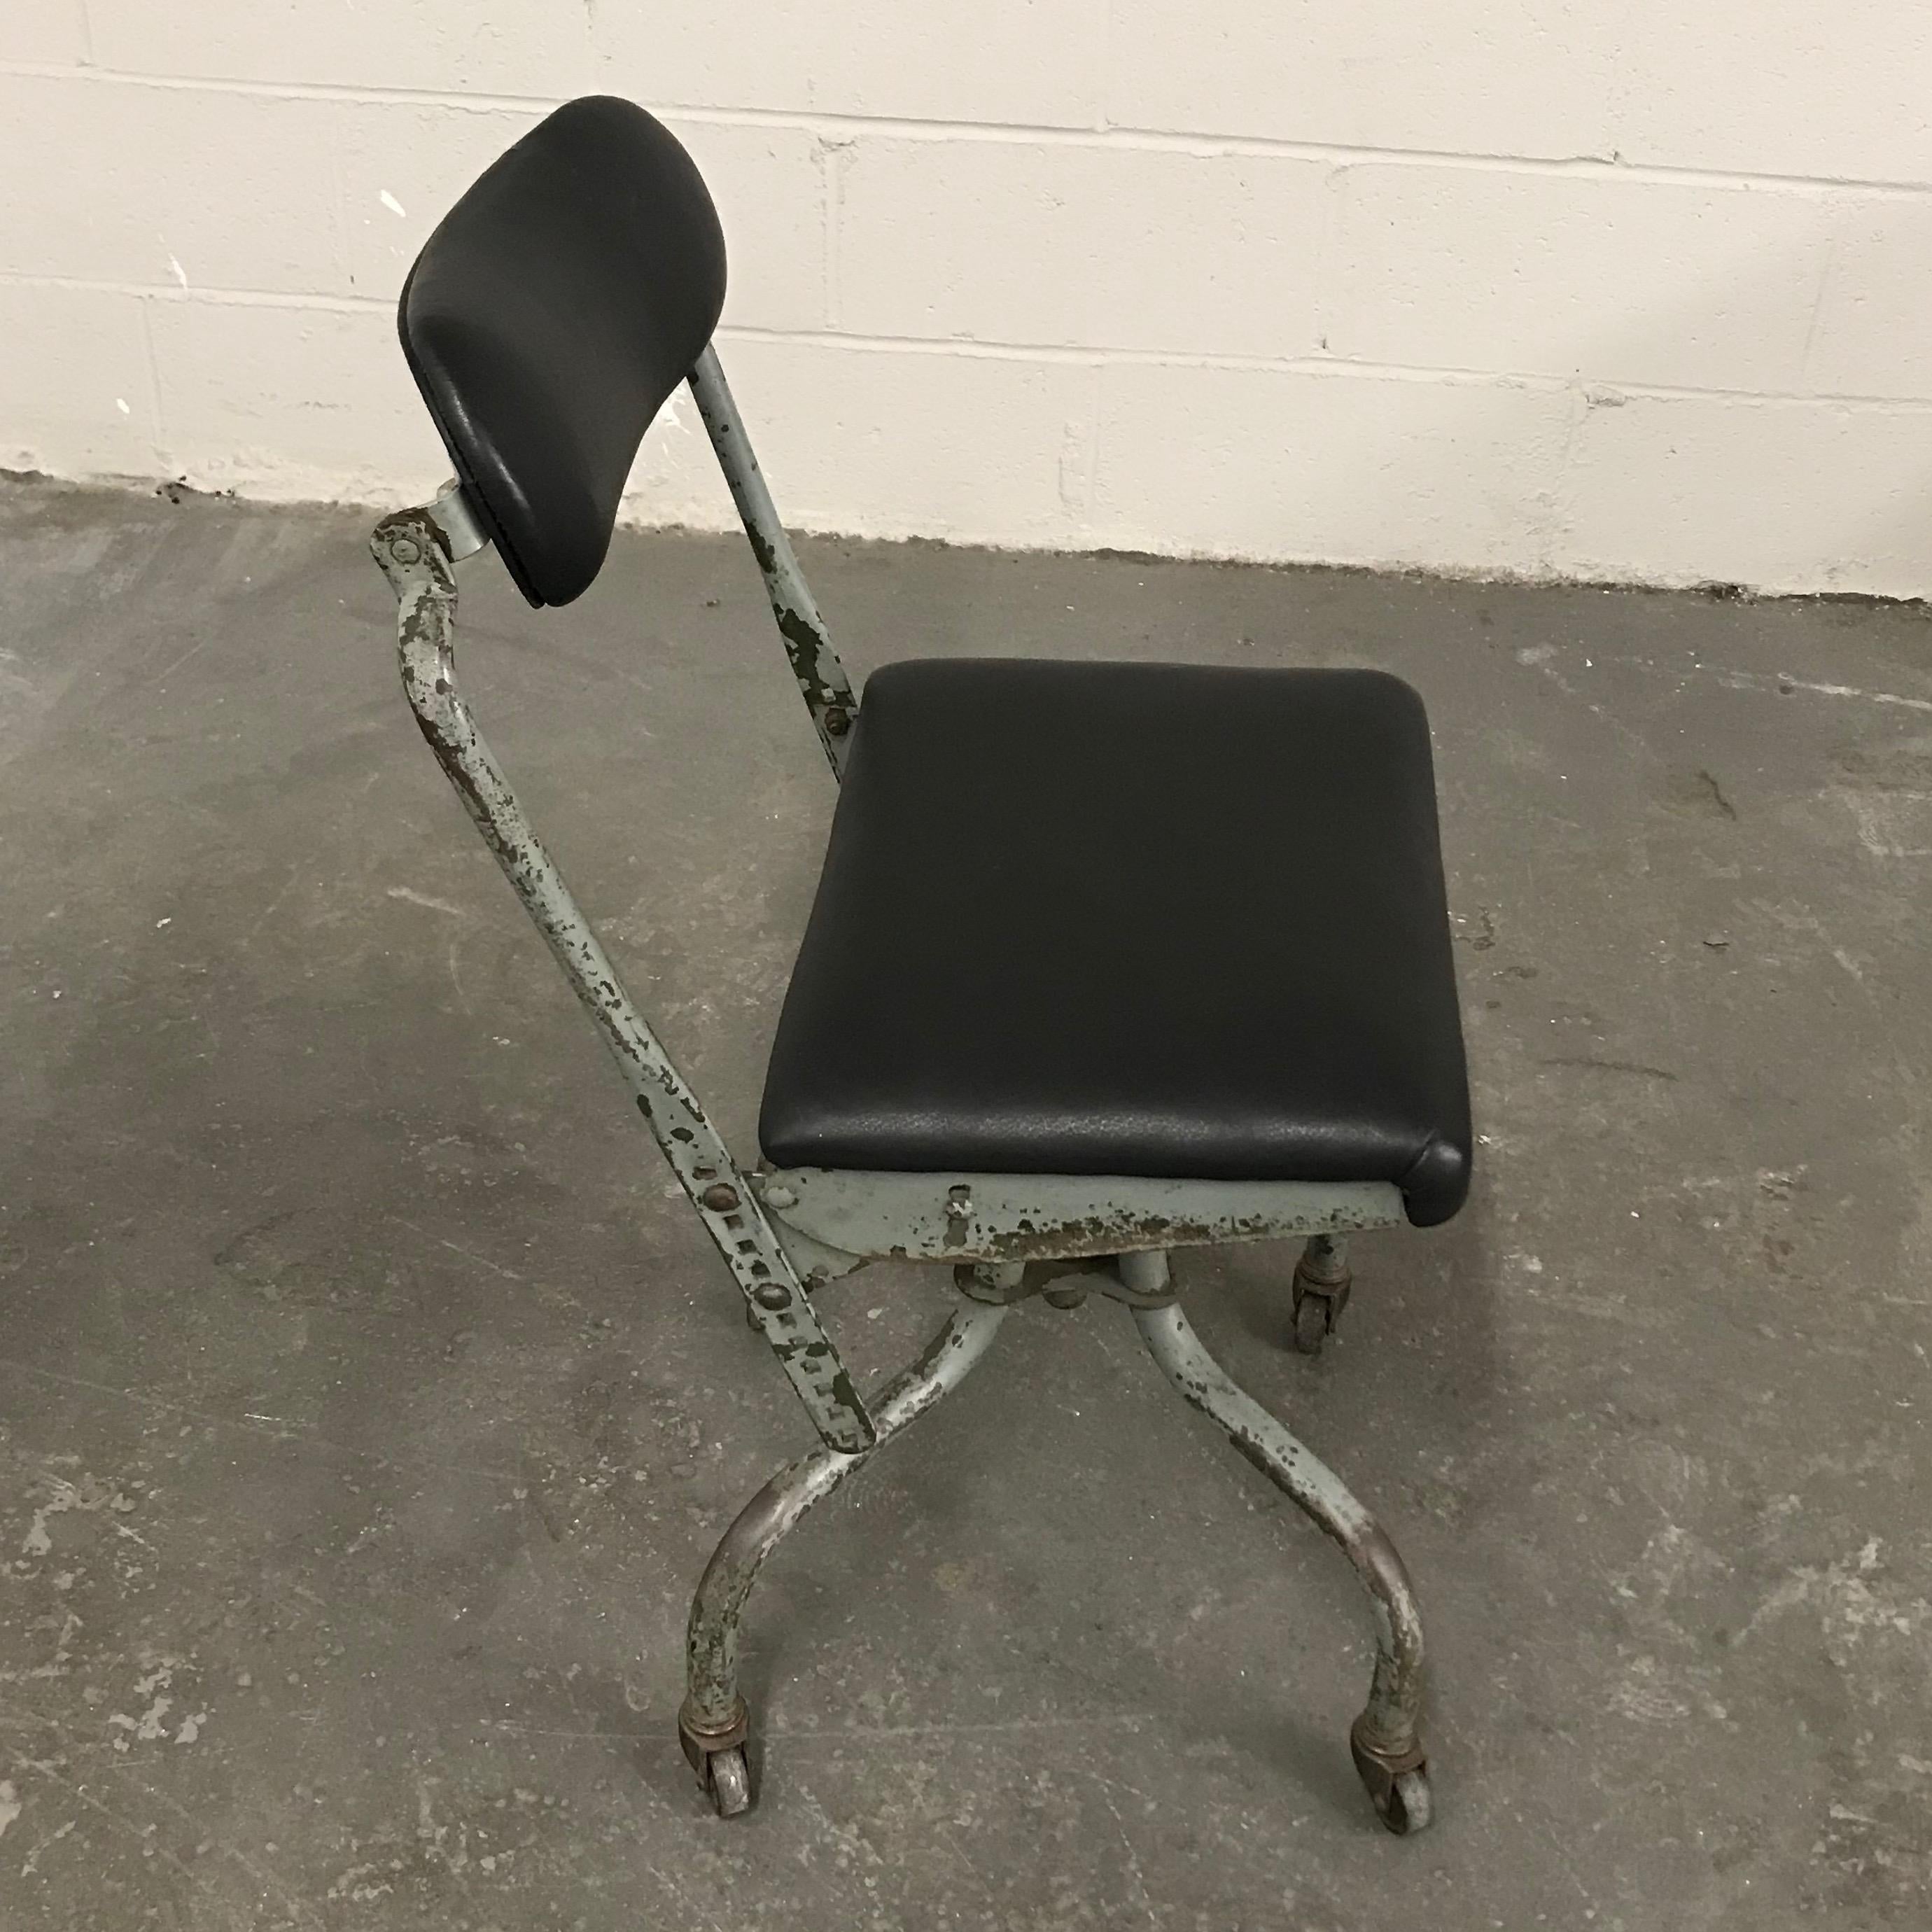 sturgis posture chair